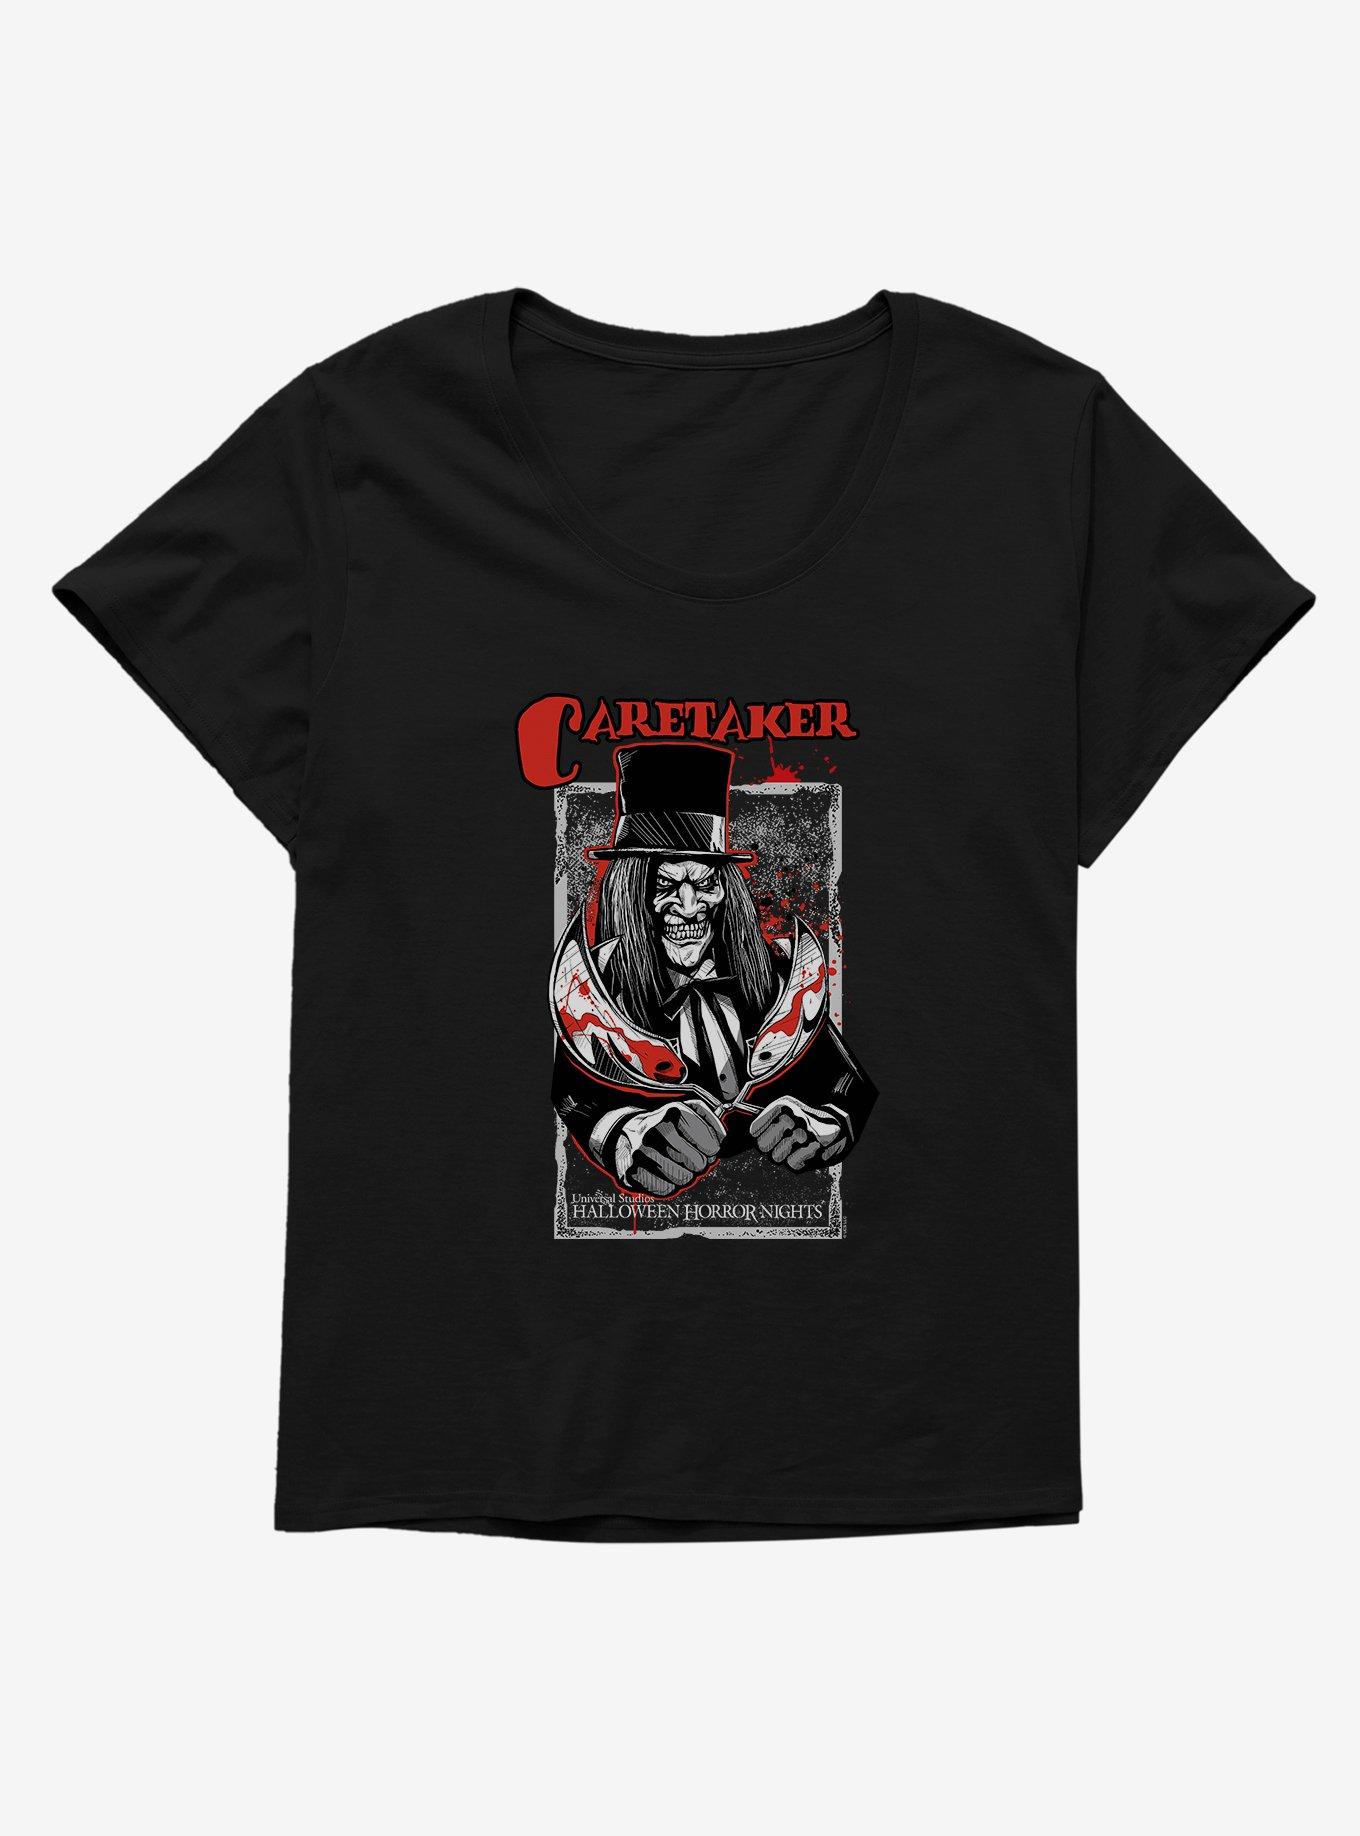 Halloween Horror Nights Caretaker Womens T-Shirt Plus Size, BLACK, hi-res